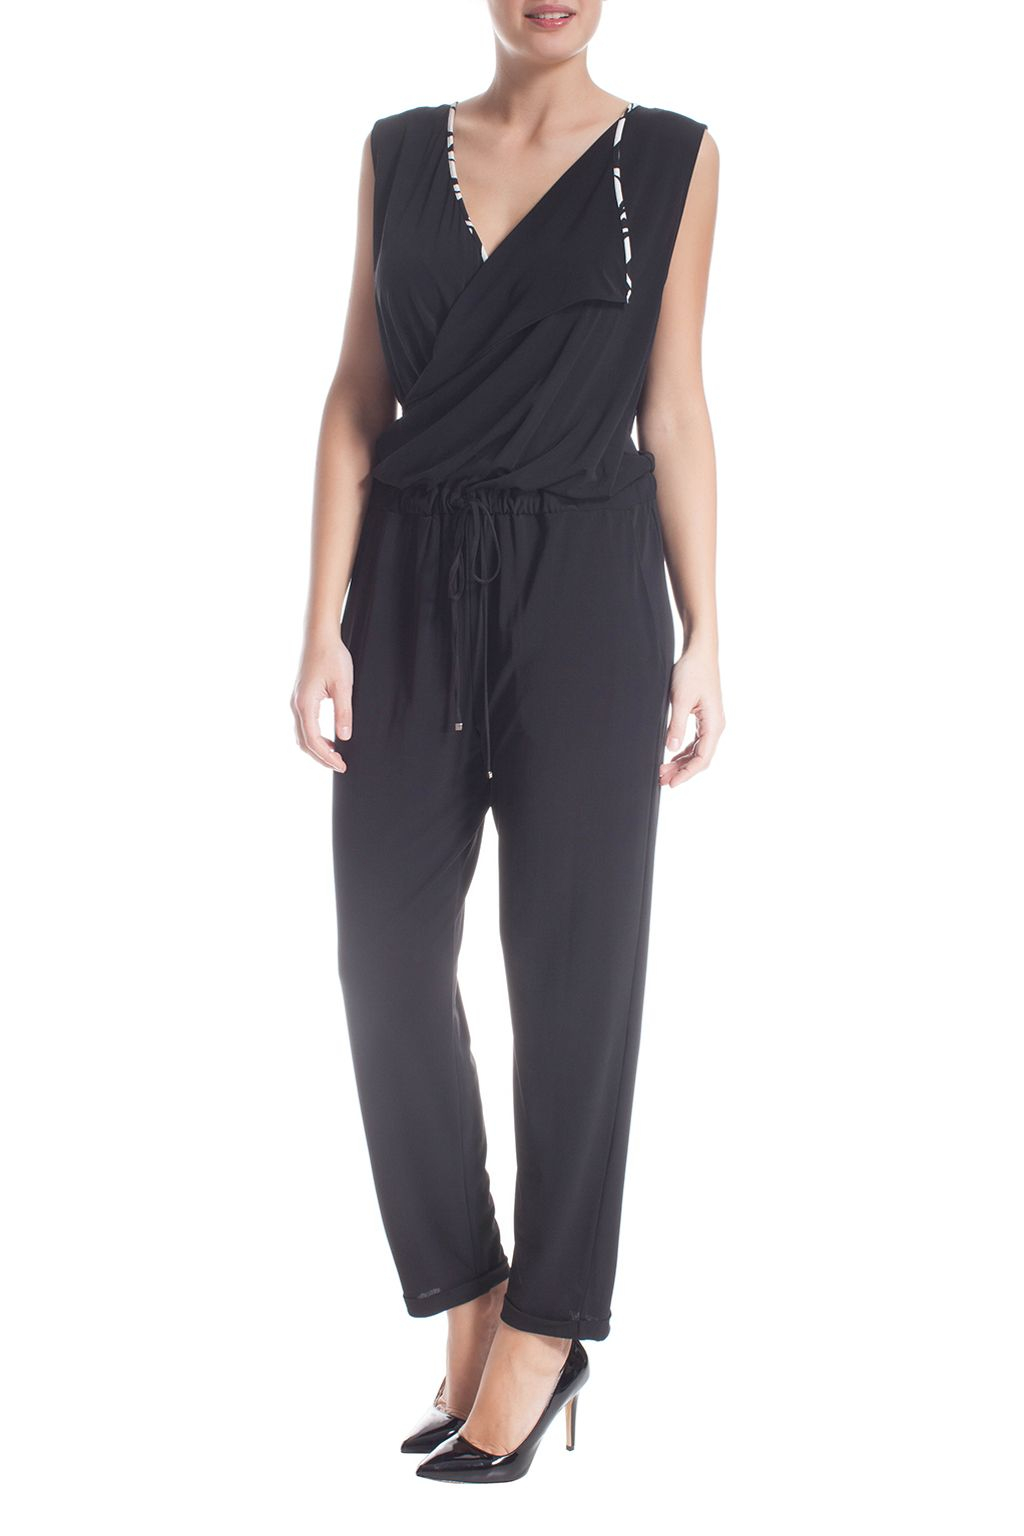 Elena Miro' Plus Size Elegant Jumpsuit in Black | Lyst